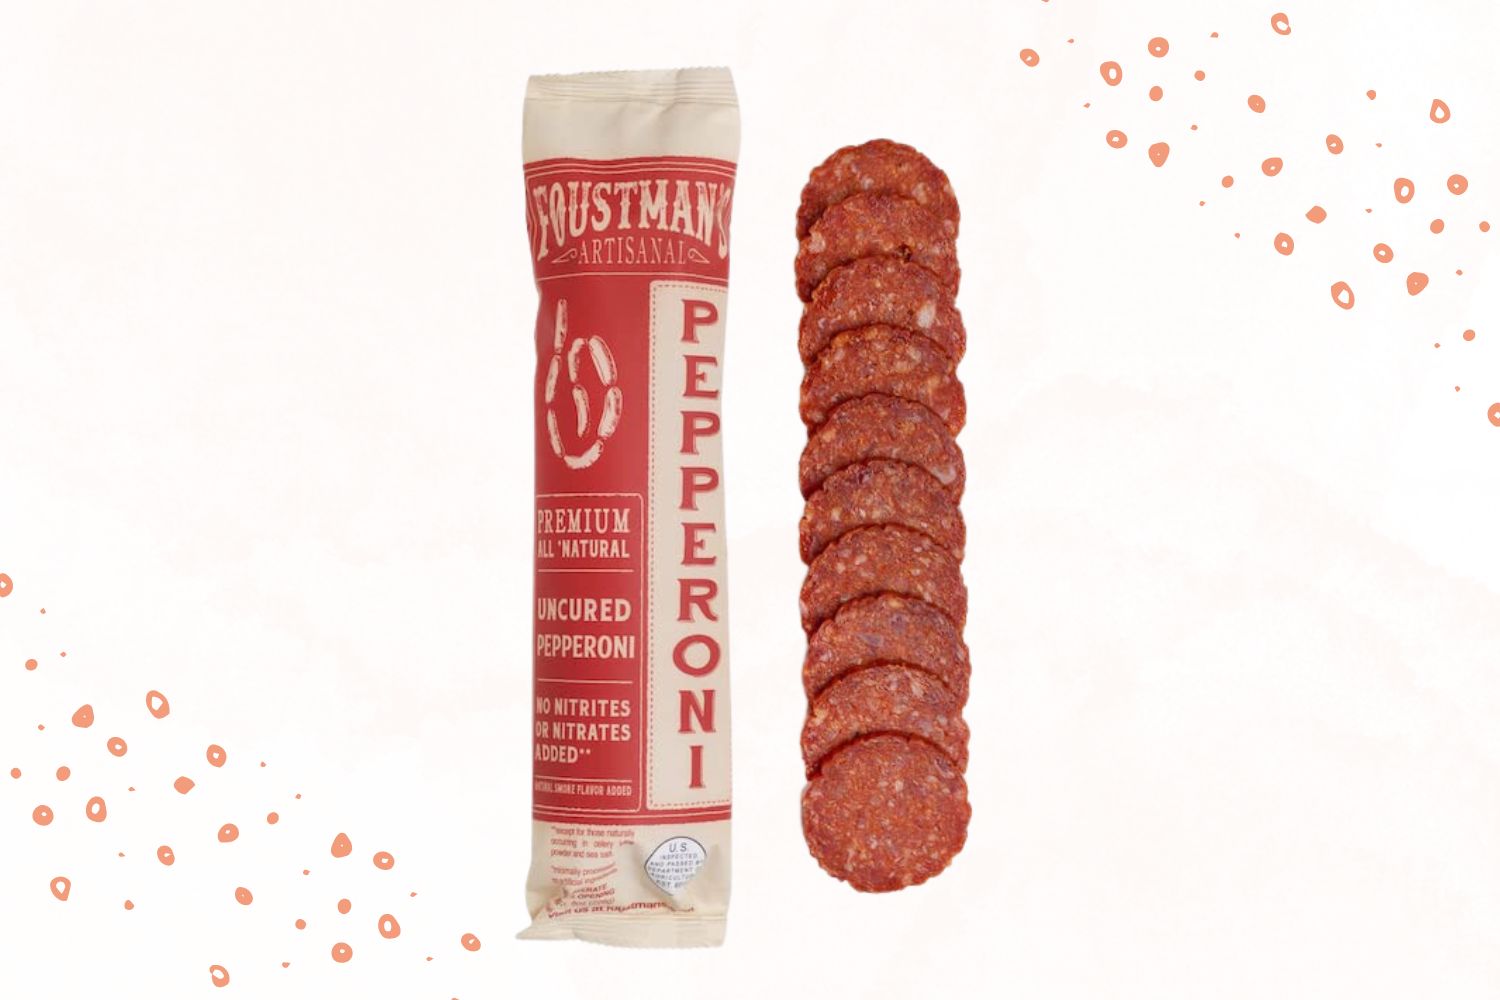 Foustman's Salami Pork and Beef Pepperoni